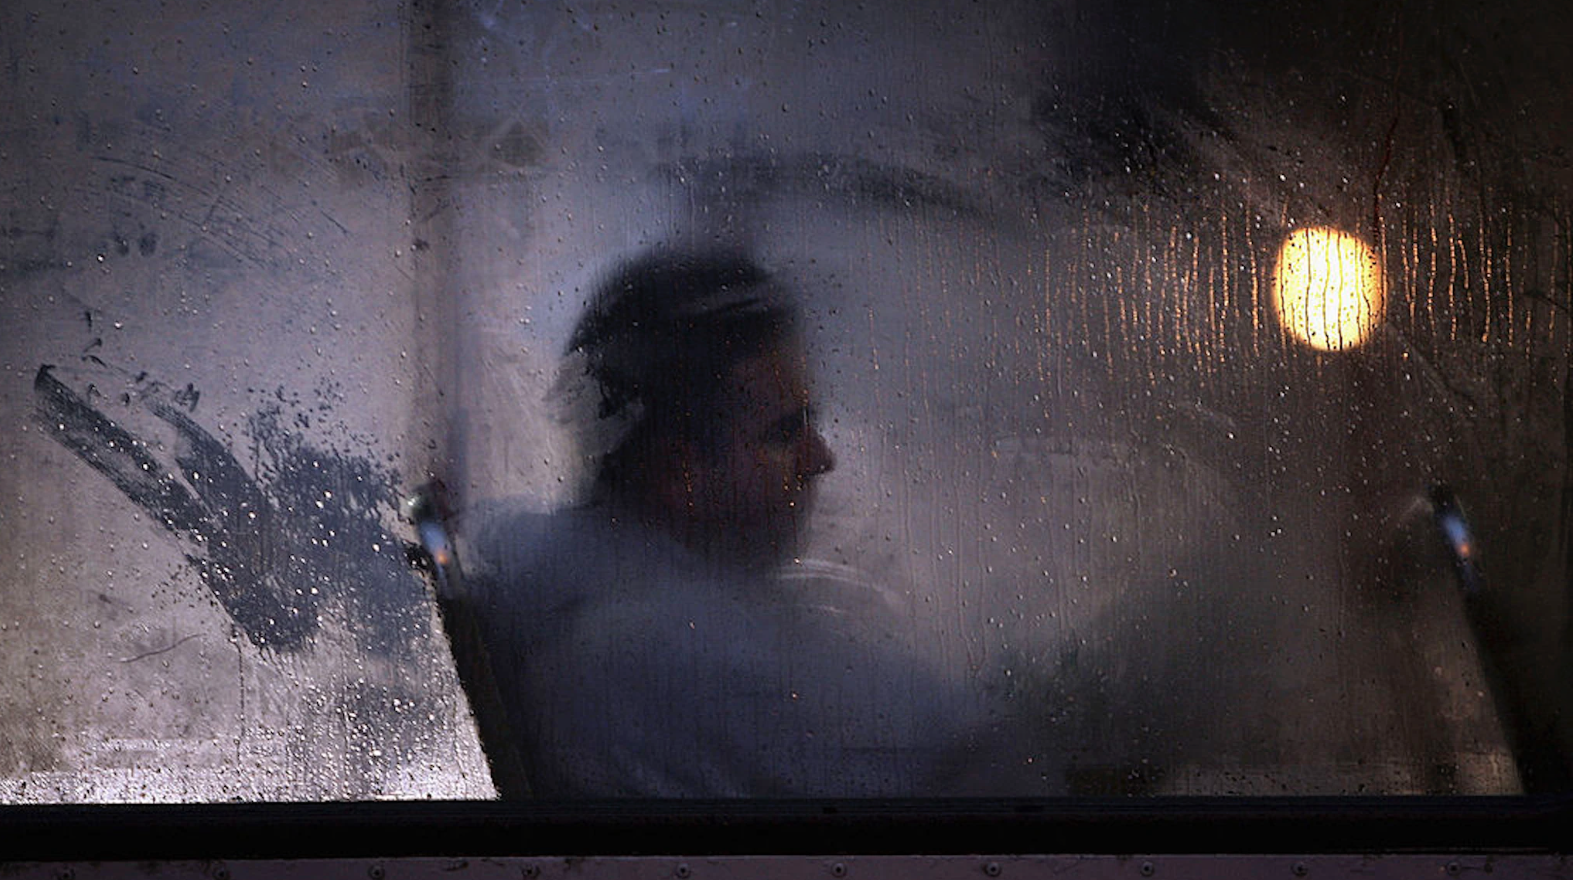 sad Man behind rain streaked glass